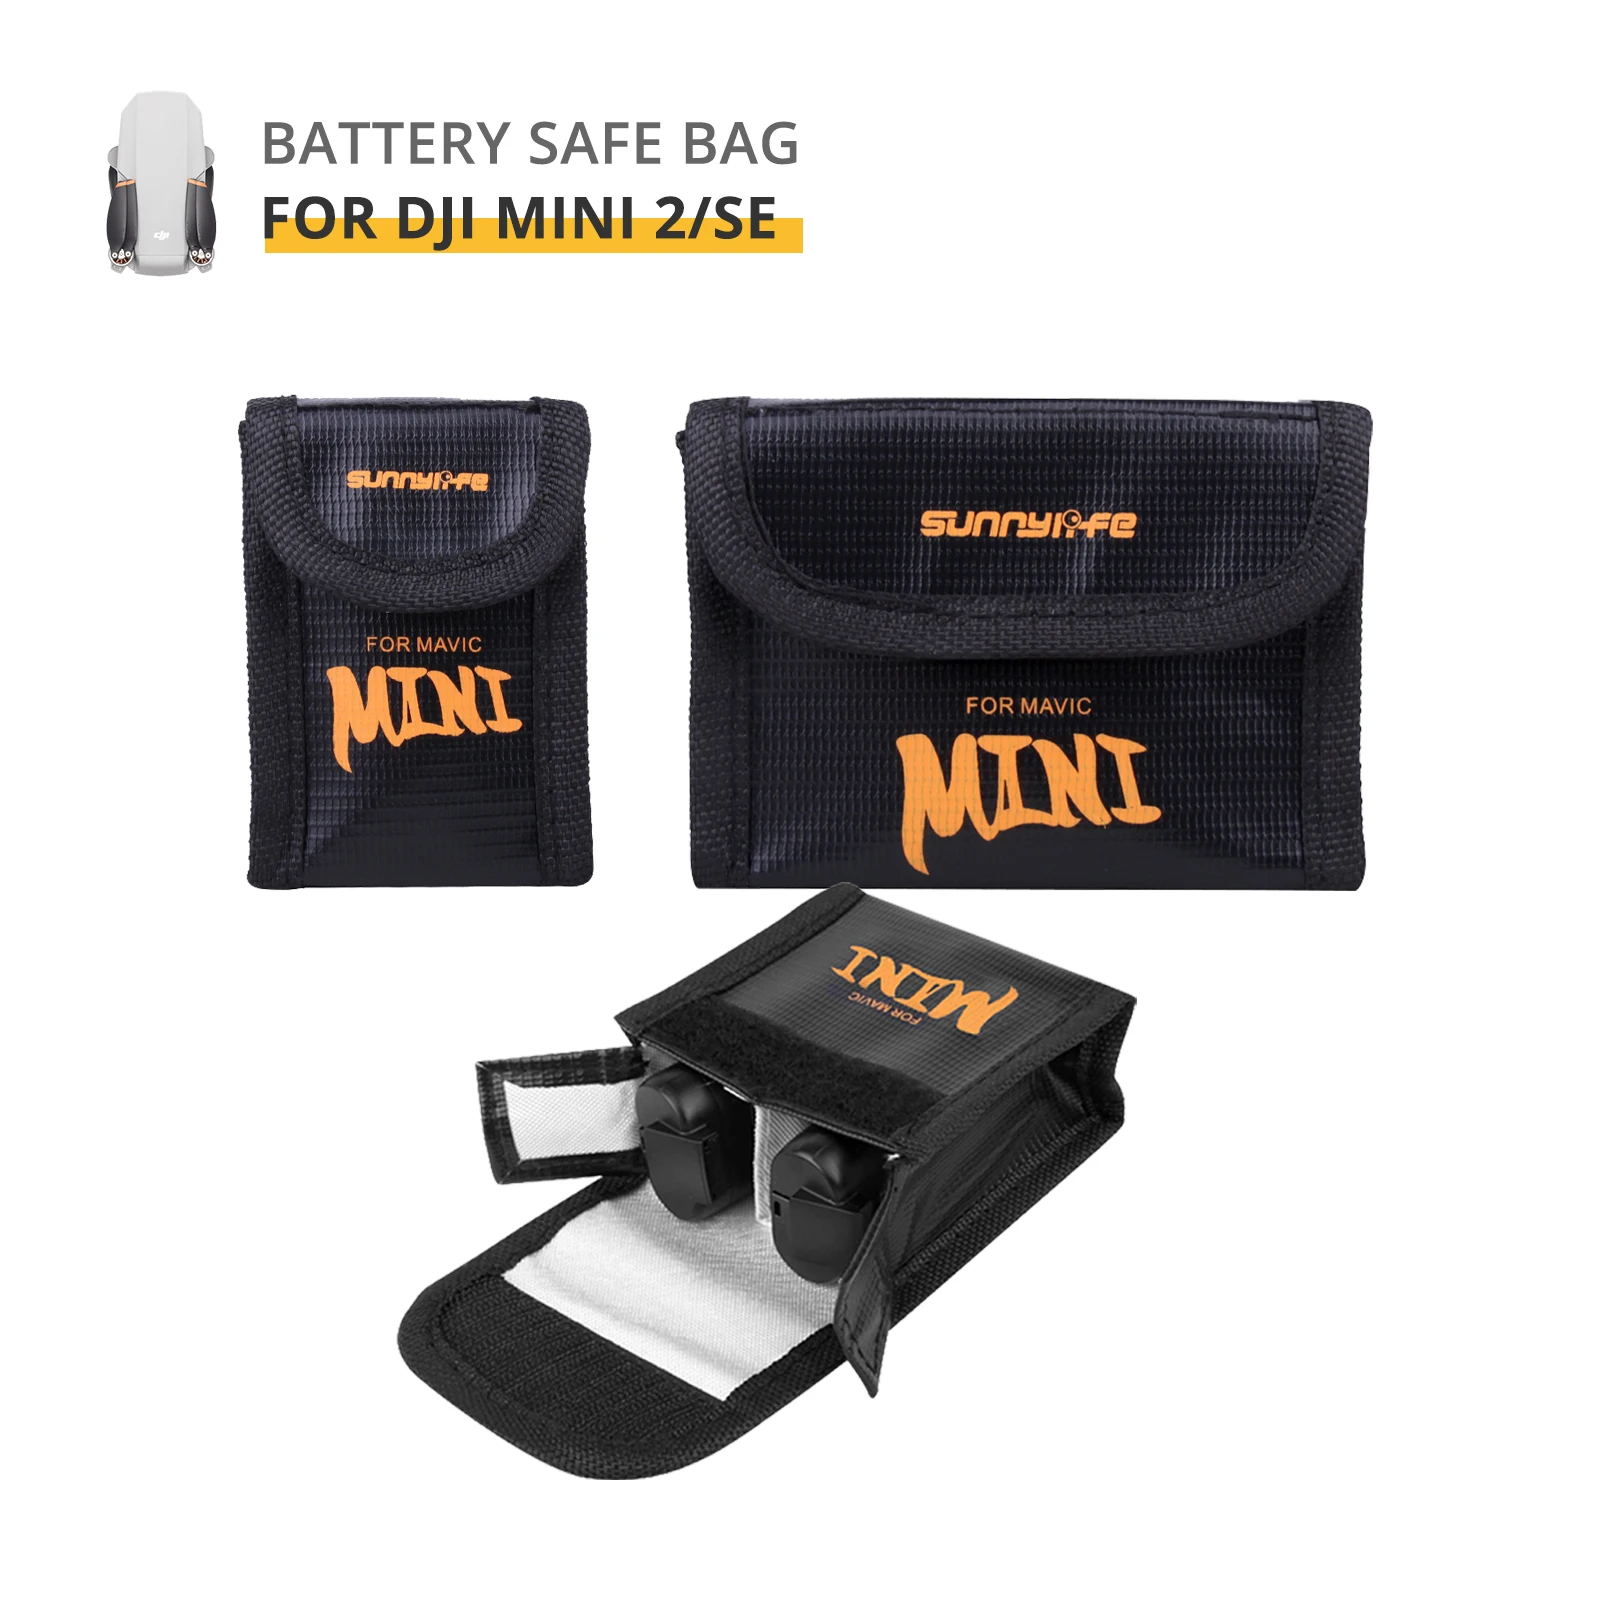 

Lipo Battery Case Explosion-Proof Safe Storage Bag for DJI Mavic Mini/Mini 2 Drone Fireproof Protective Box Radiation Protection